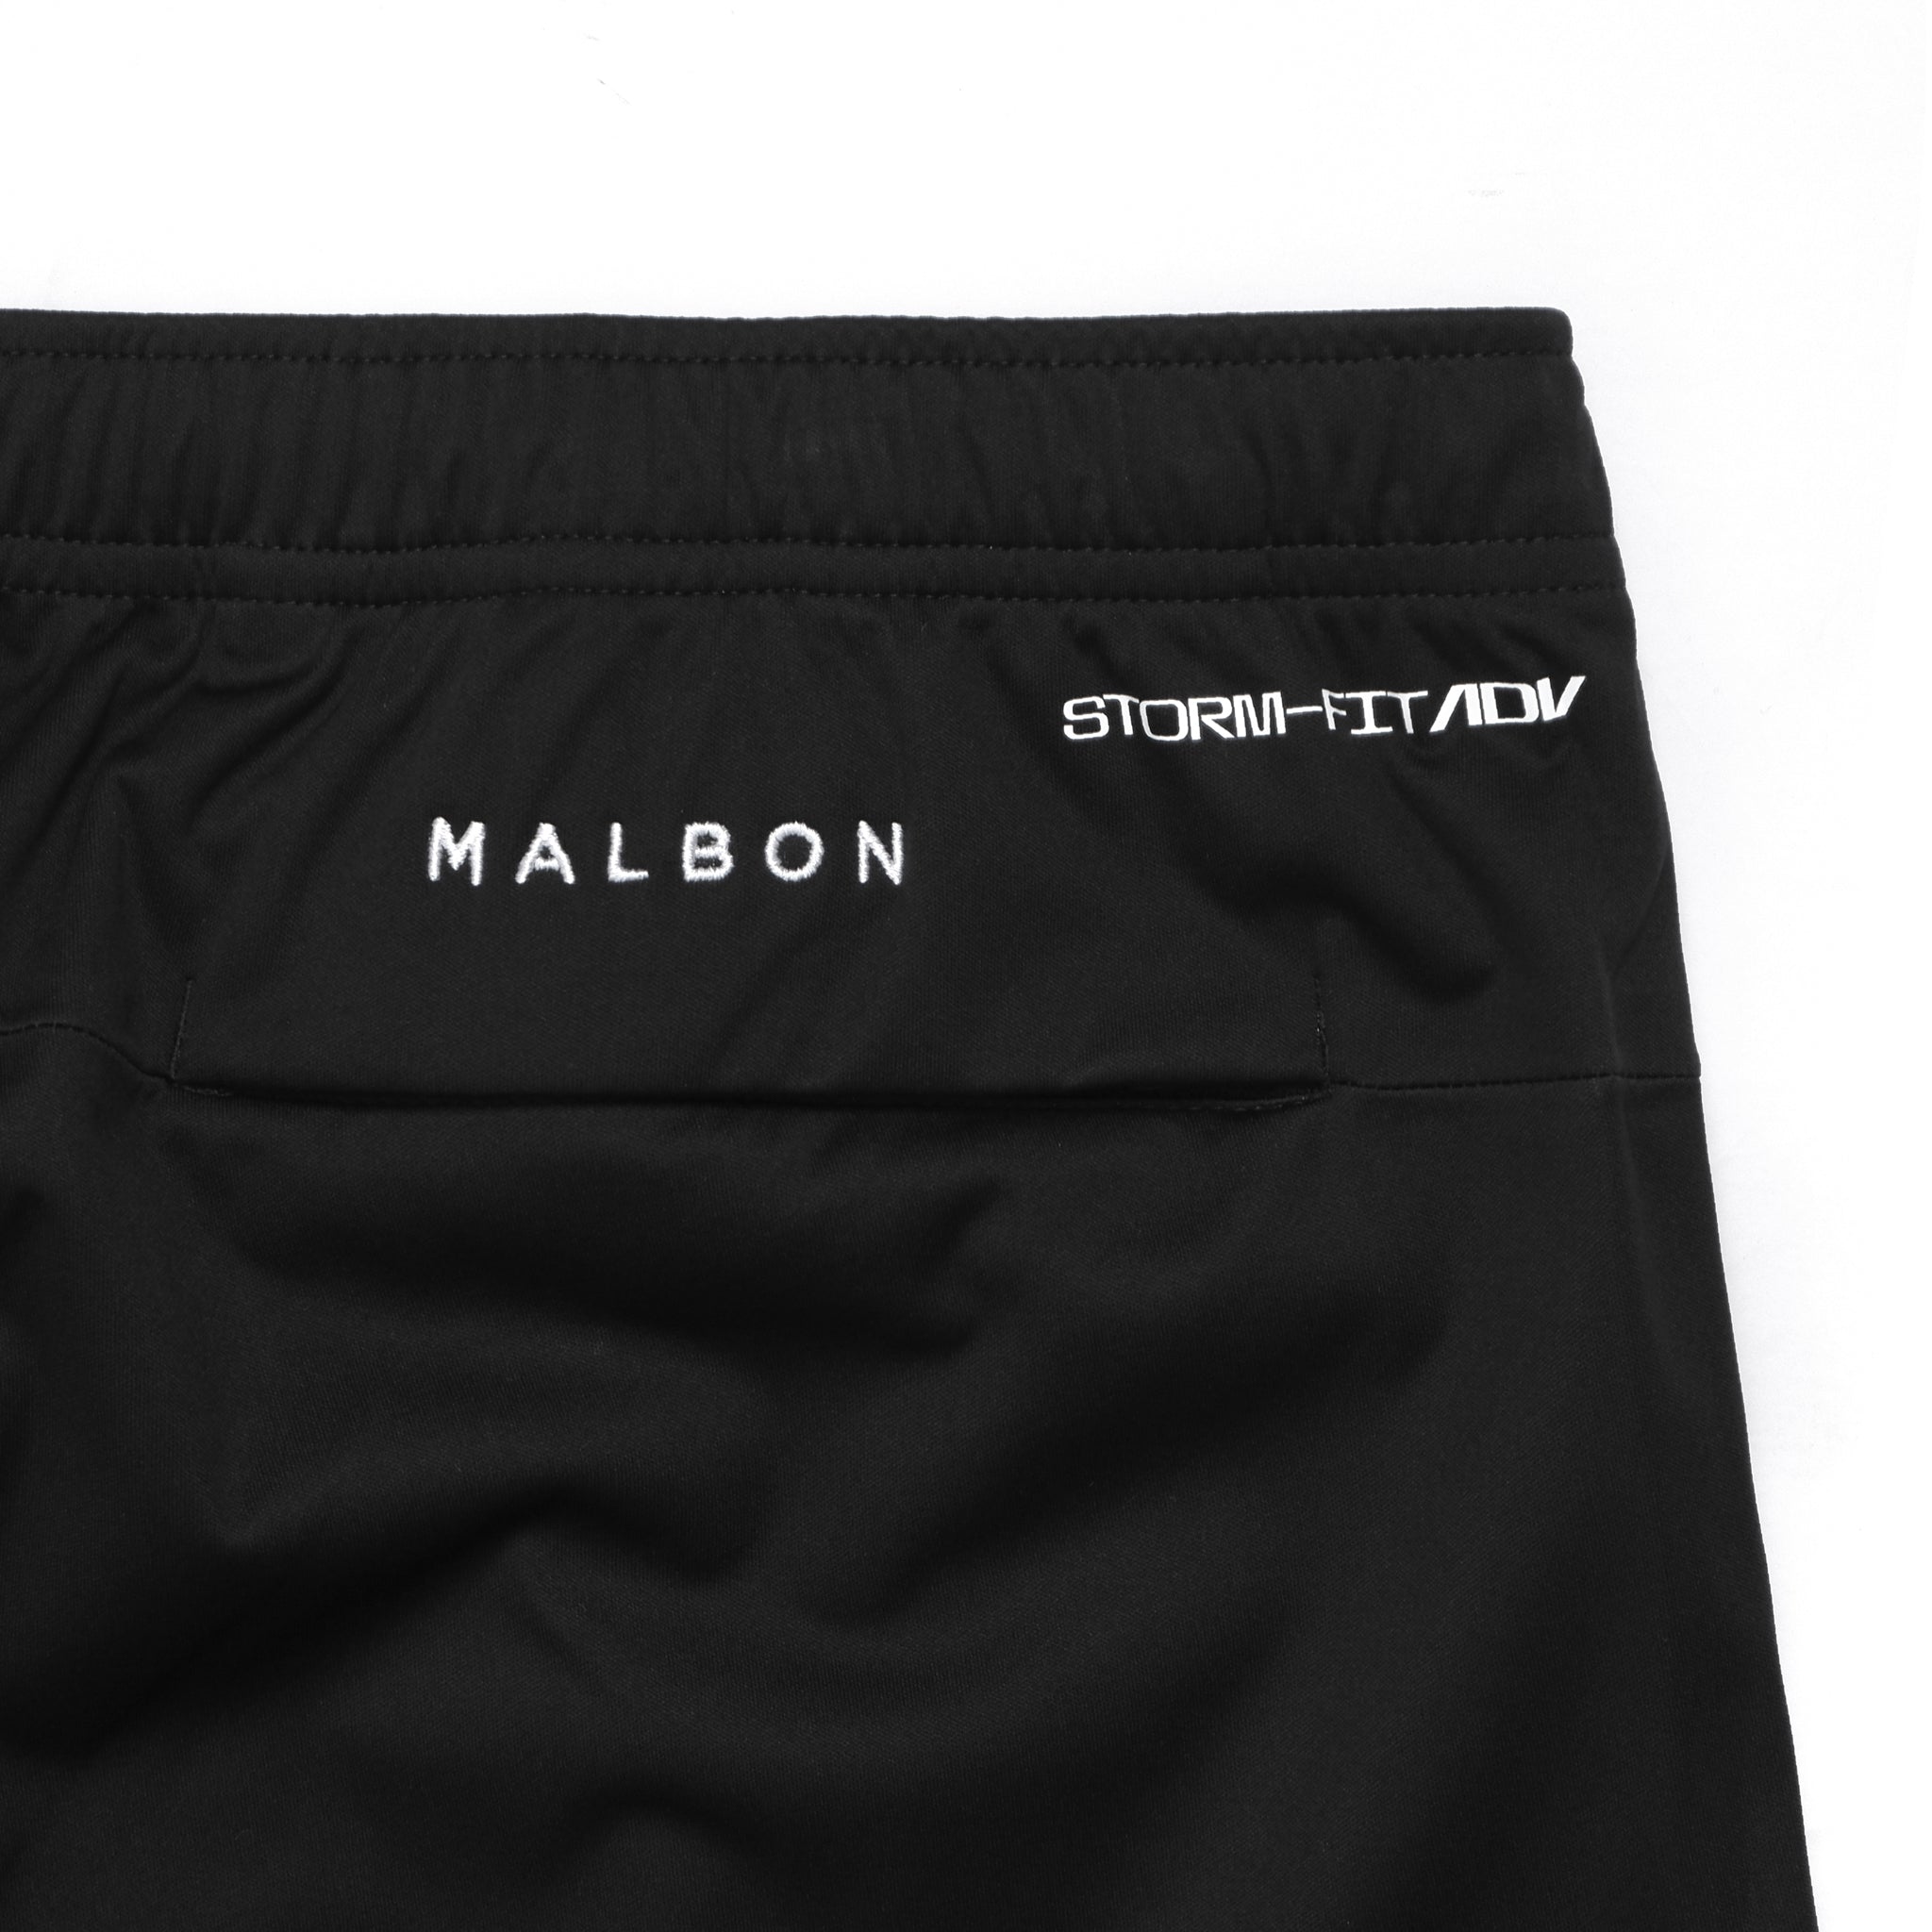 Malbon x Nike Storm-Fit ADV Pant